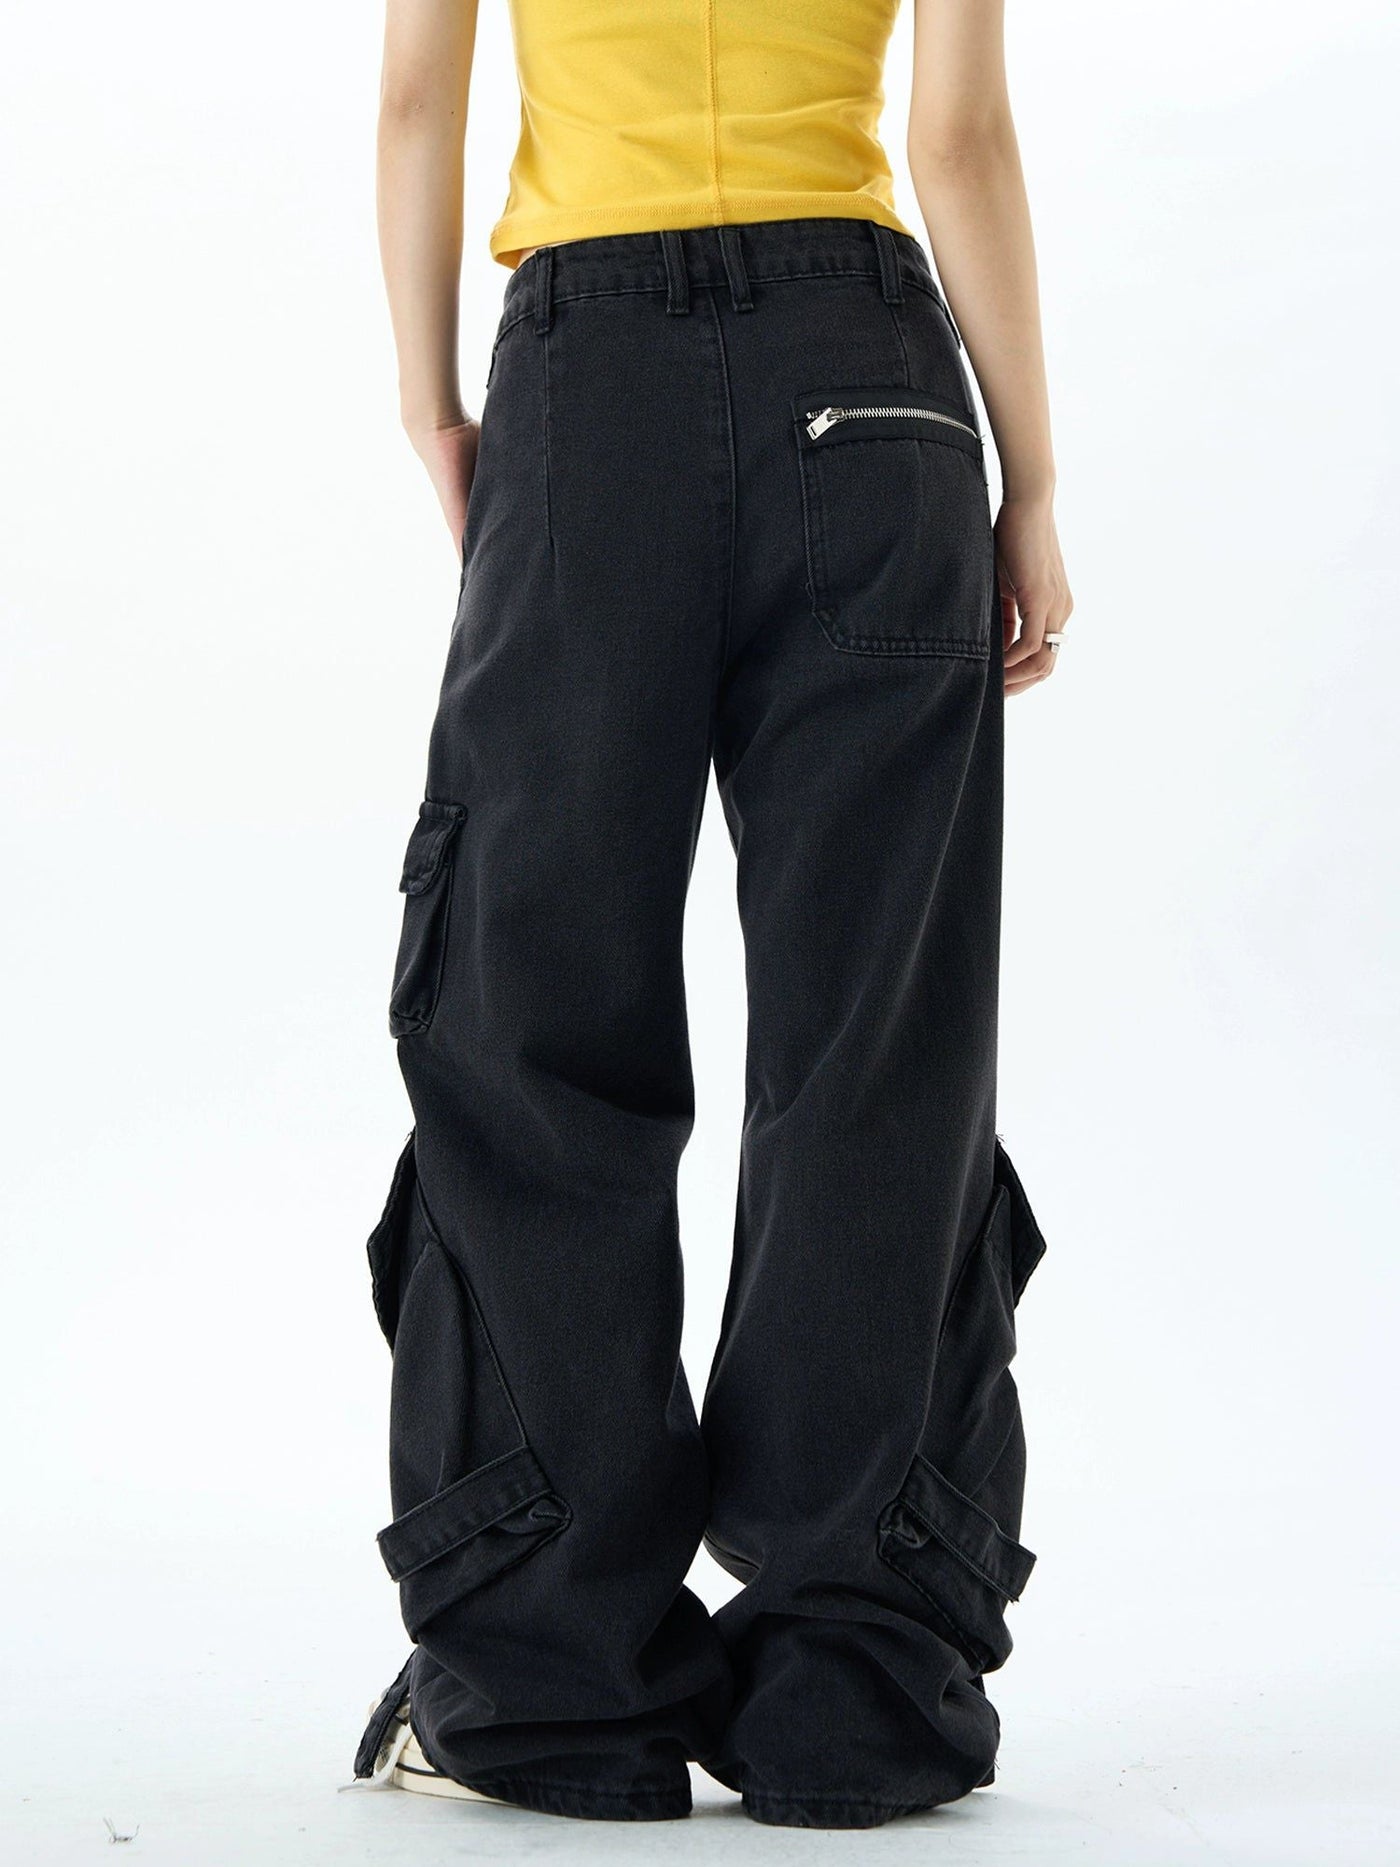 Buckled Pocket Cargo Jeans Korean Street Fashion Jeans By MaxDstr Shop Online at OH Vault